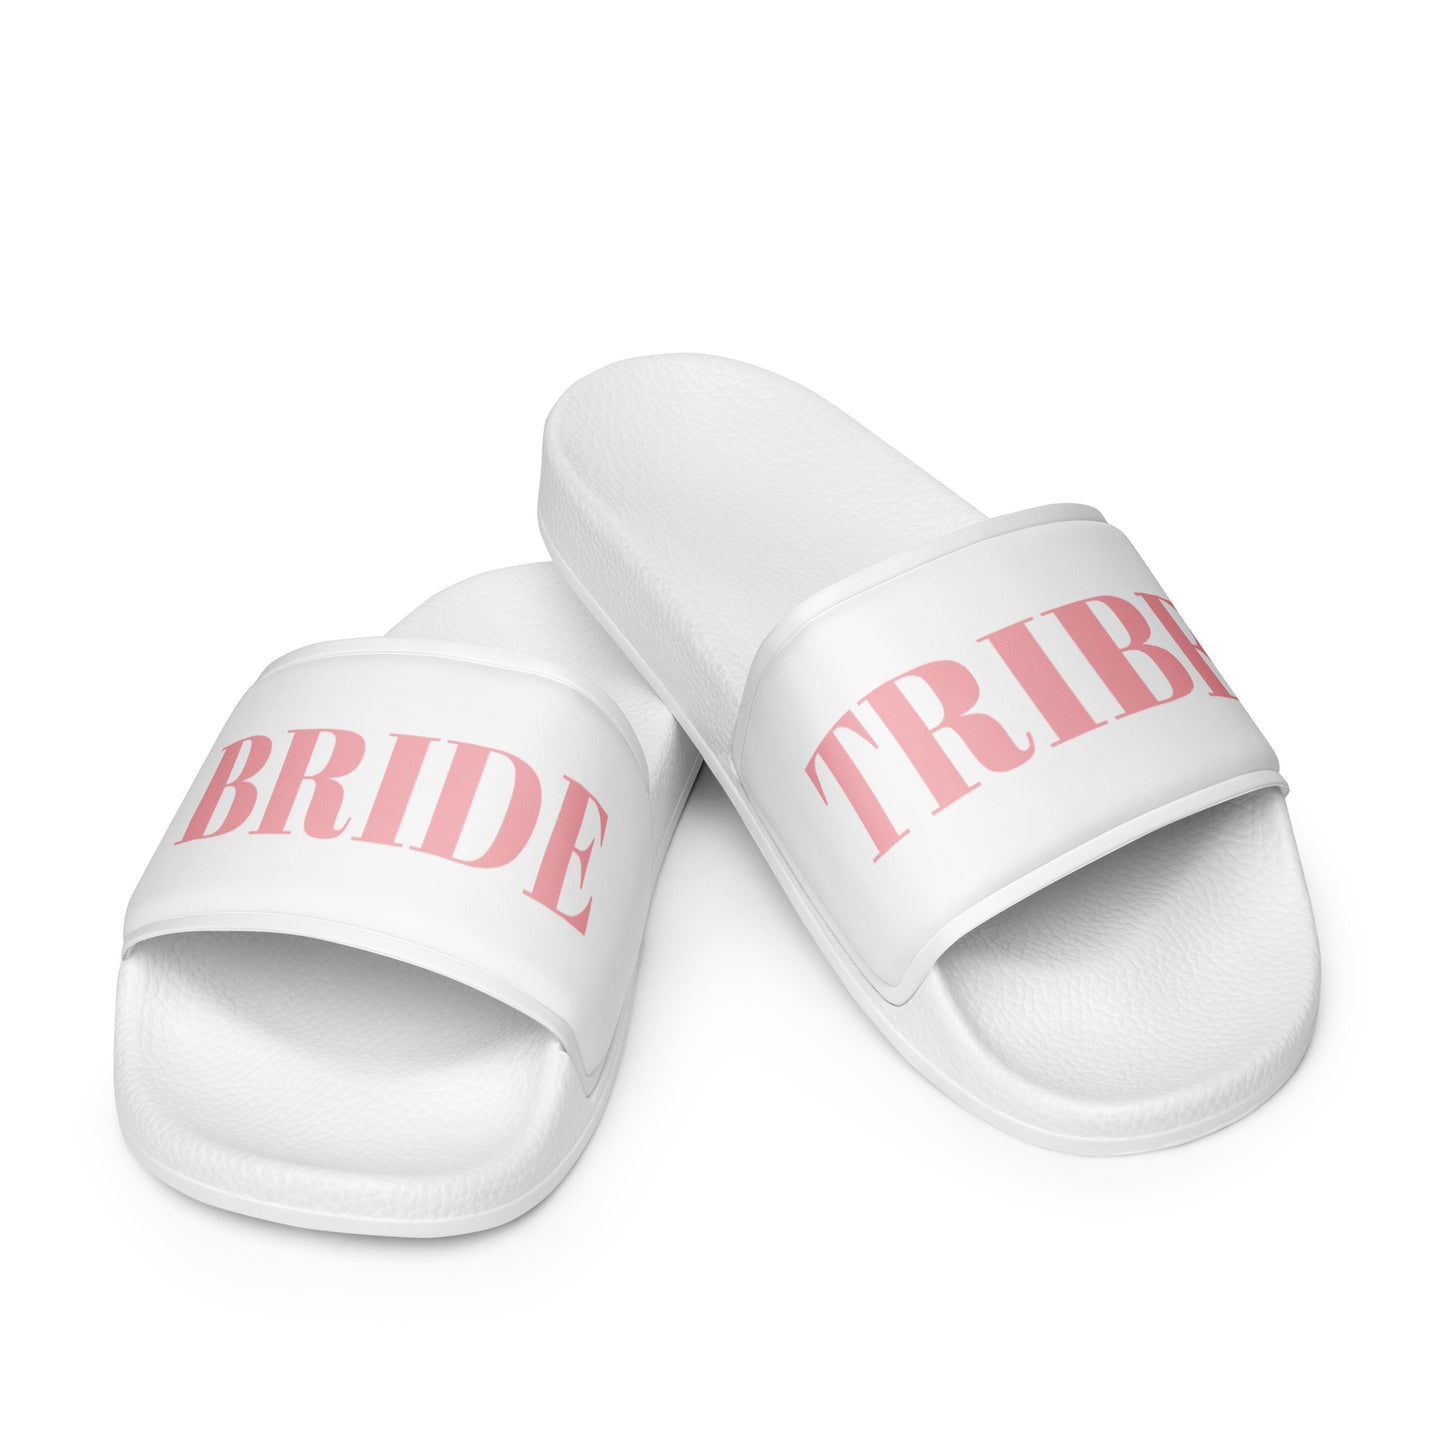 Bride Tribe Women's slides